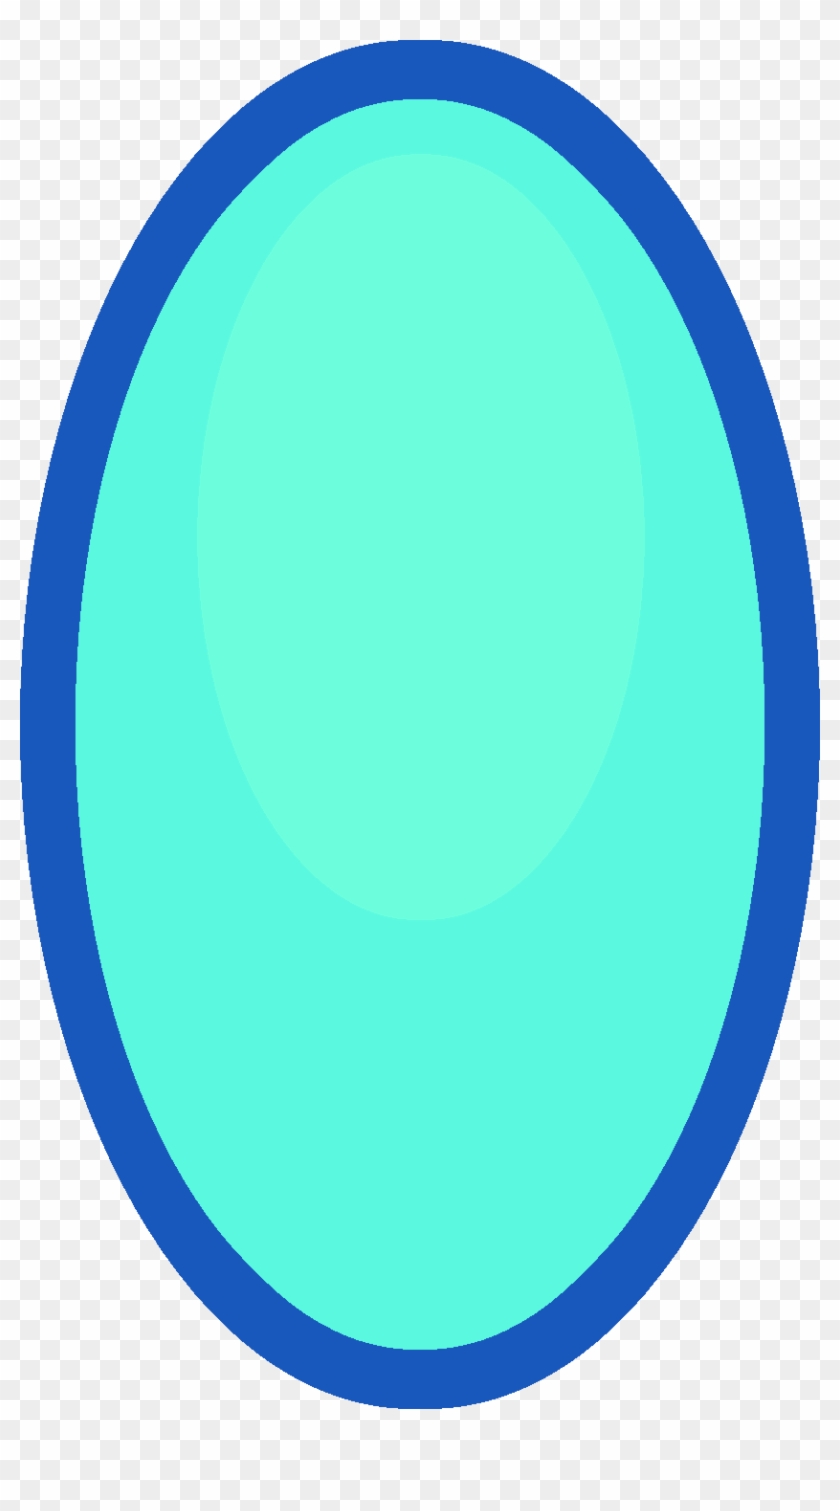 Slinker Could Be A Corrupted Blue Pearl - Circle Aqua #810112